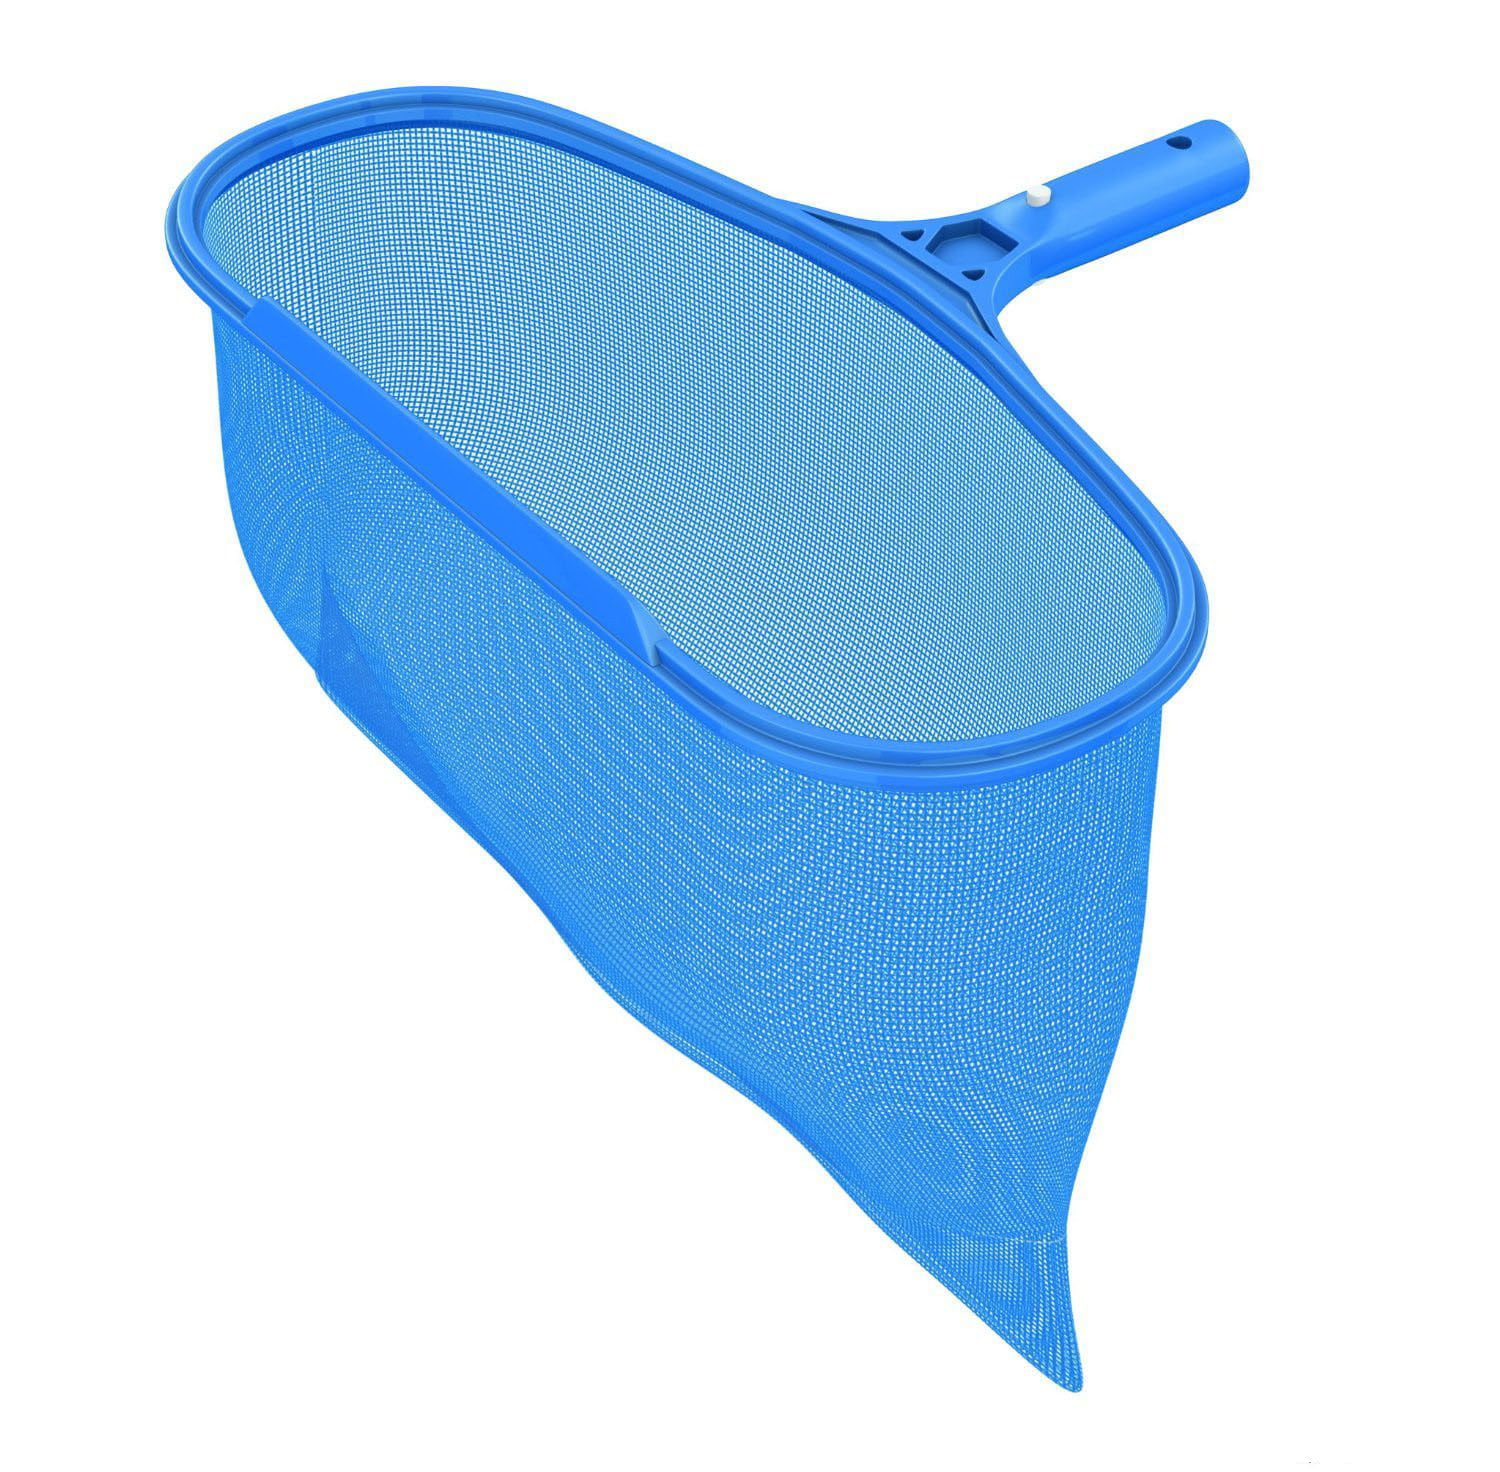 Durable Swimming Pool Spa Leaf Skimmer Net Rake w/ Deep Pocket Net Cleaning Tool 